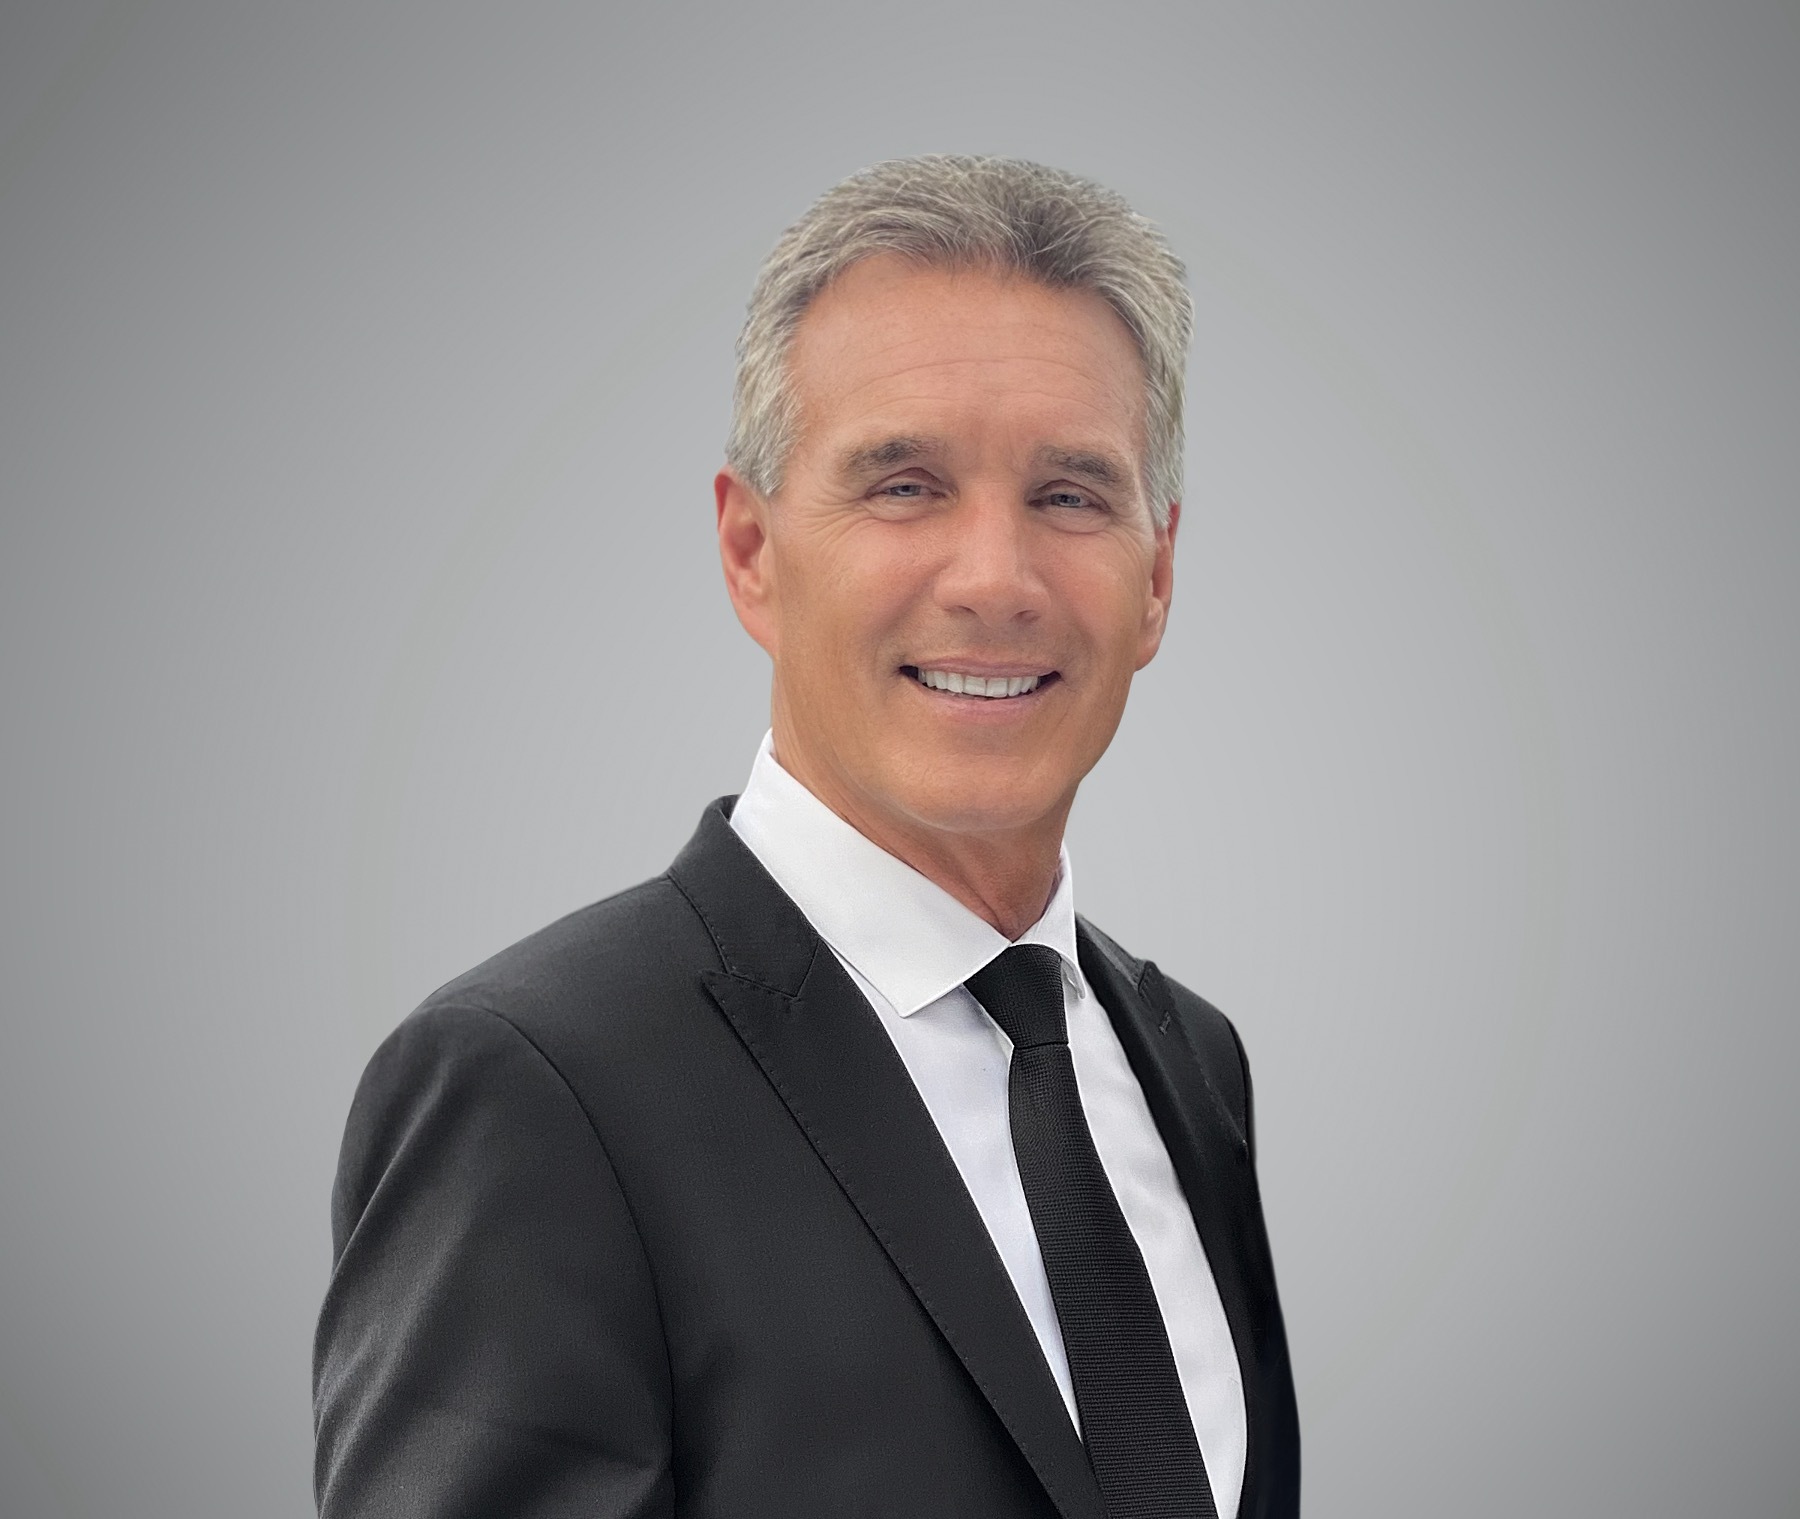 Todd Bourgard, senior executive regional manager of Hamptons sales at Douglas Elliman